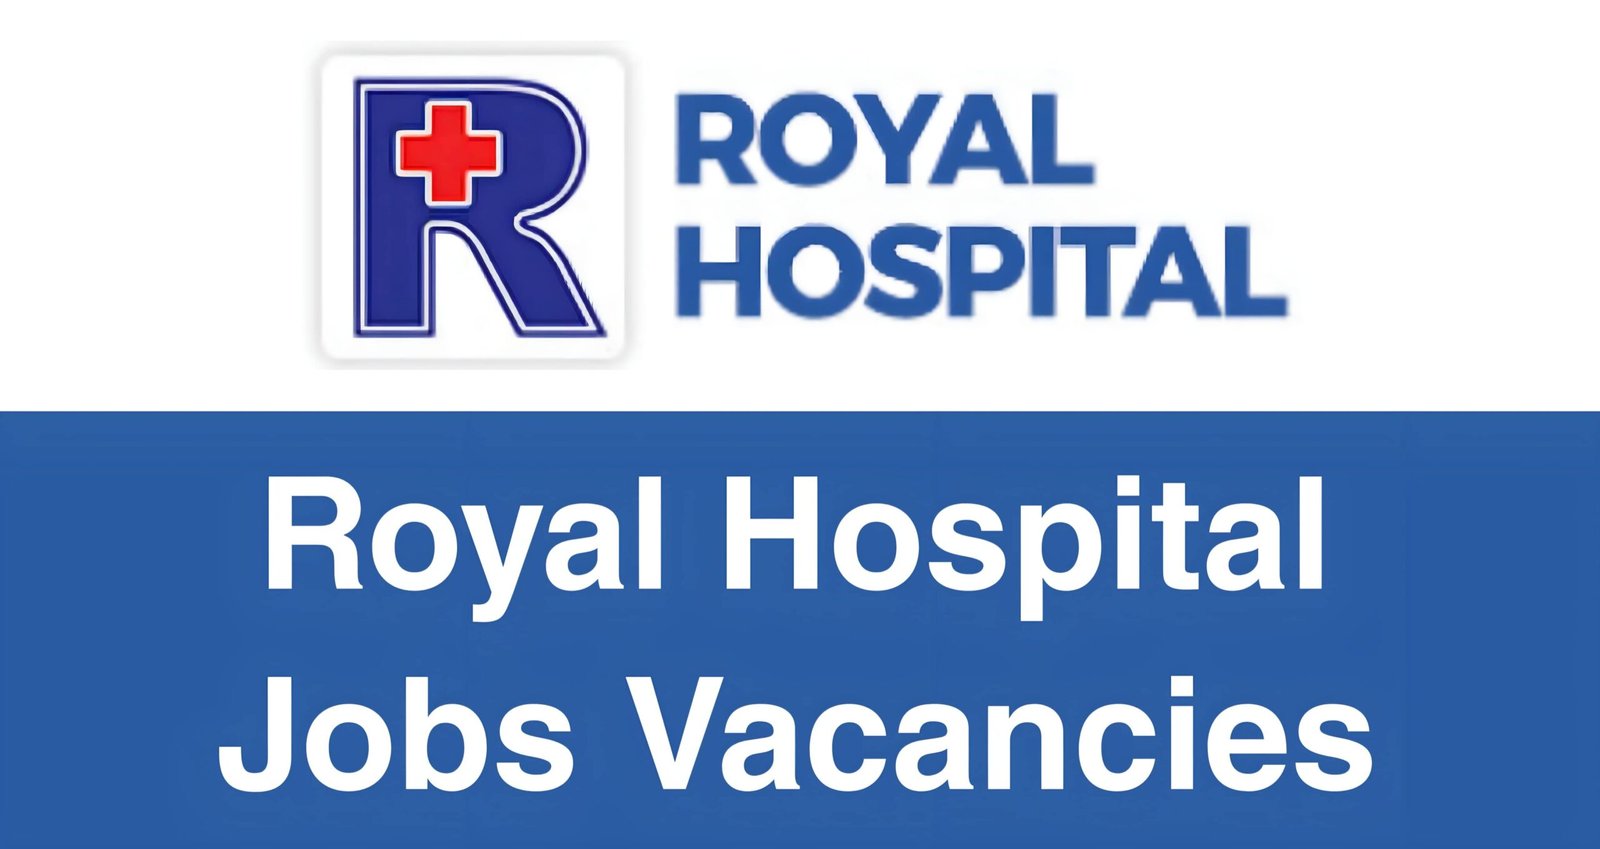 Royal Hospital Jobs Vacancies